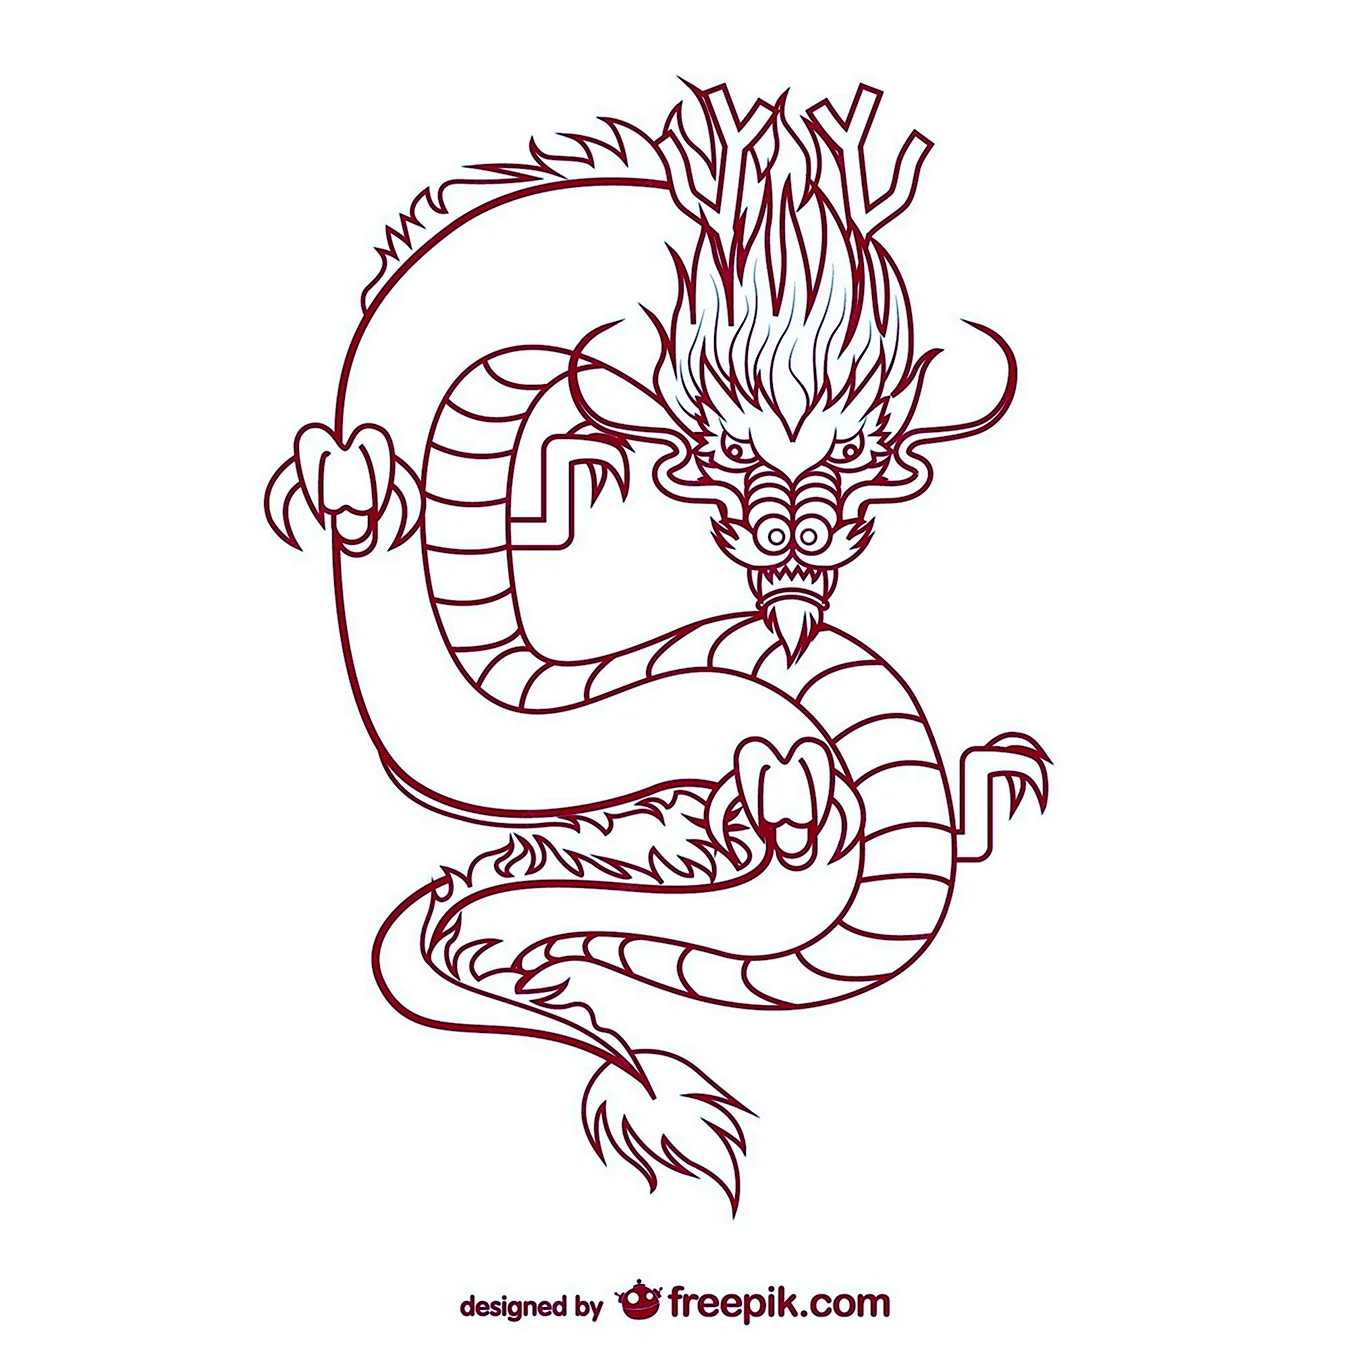 Китайский дракон рисовка. Для срисовки